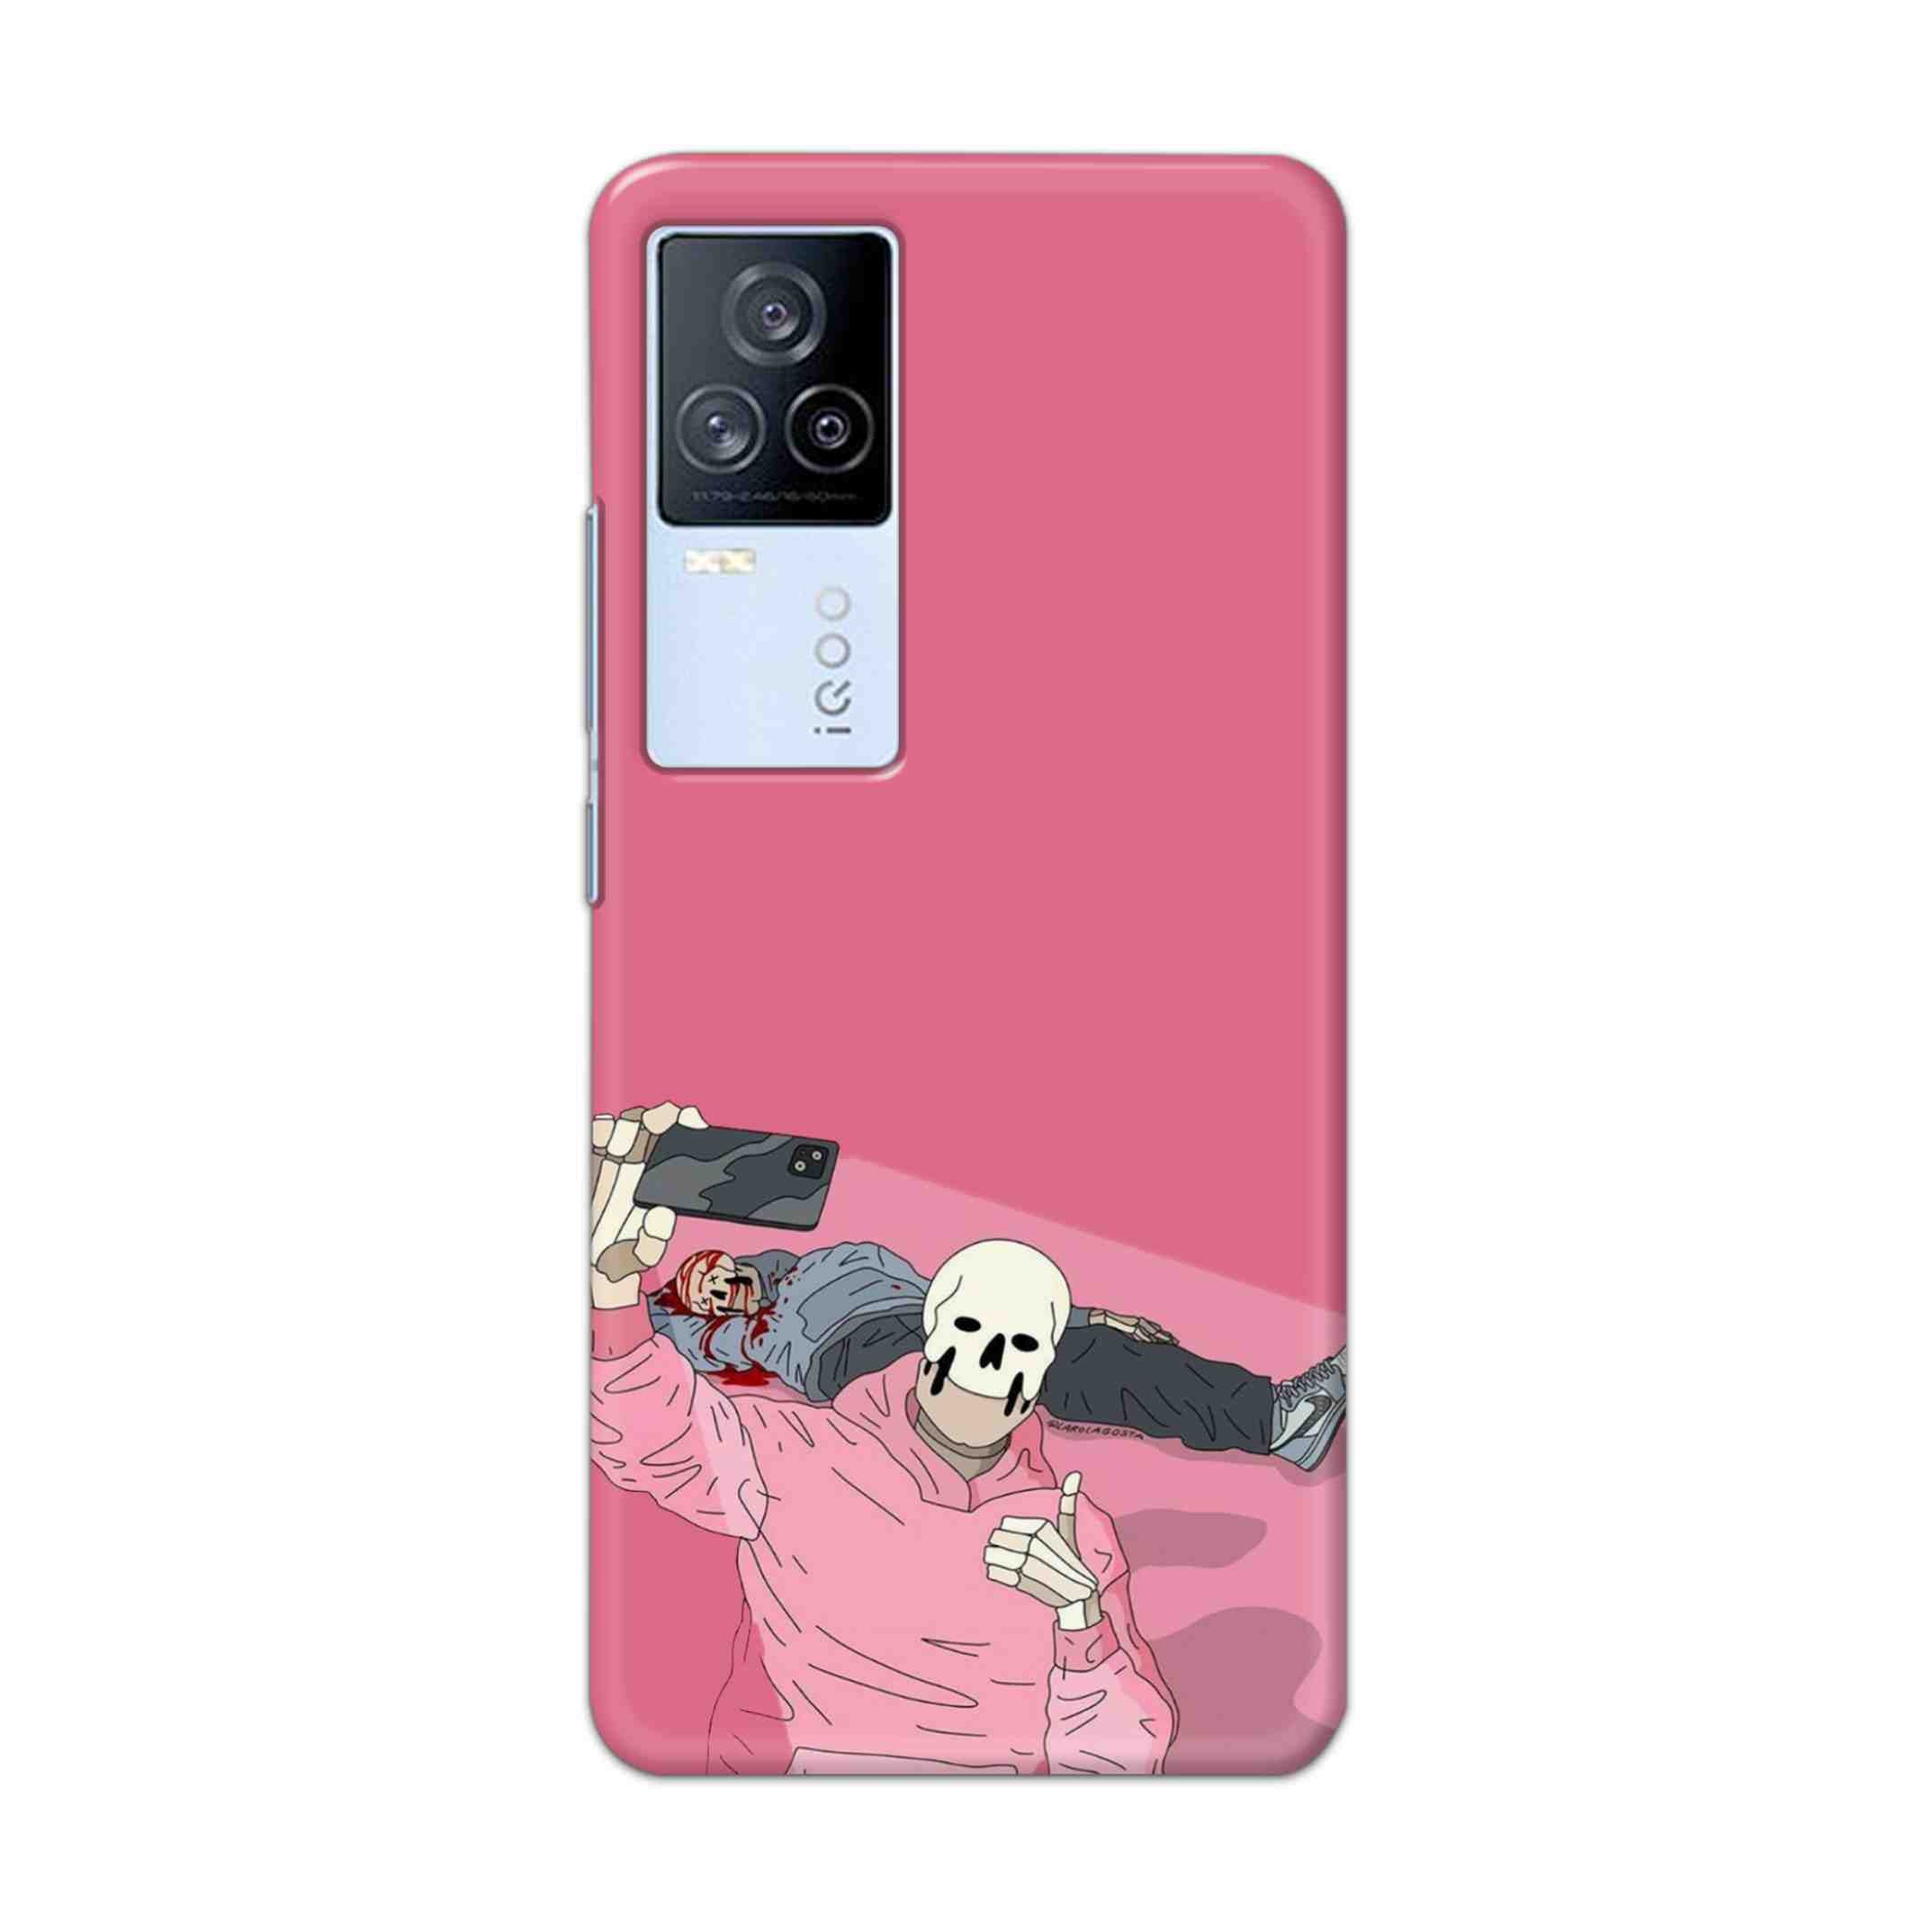 Buy Selfie Hard Back Mobile Phone Case/Cover For iQOO7 Online